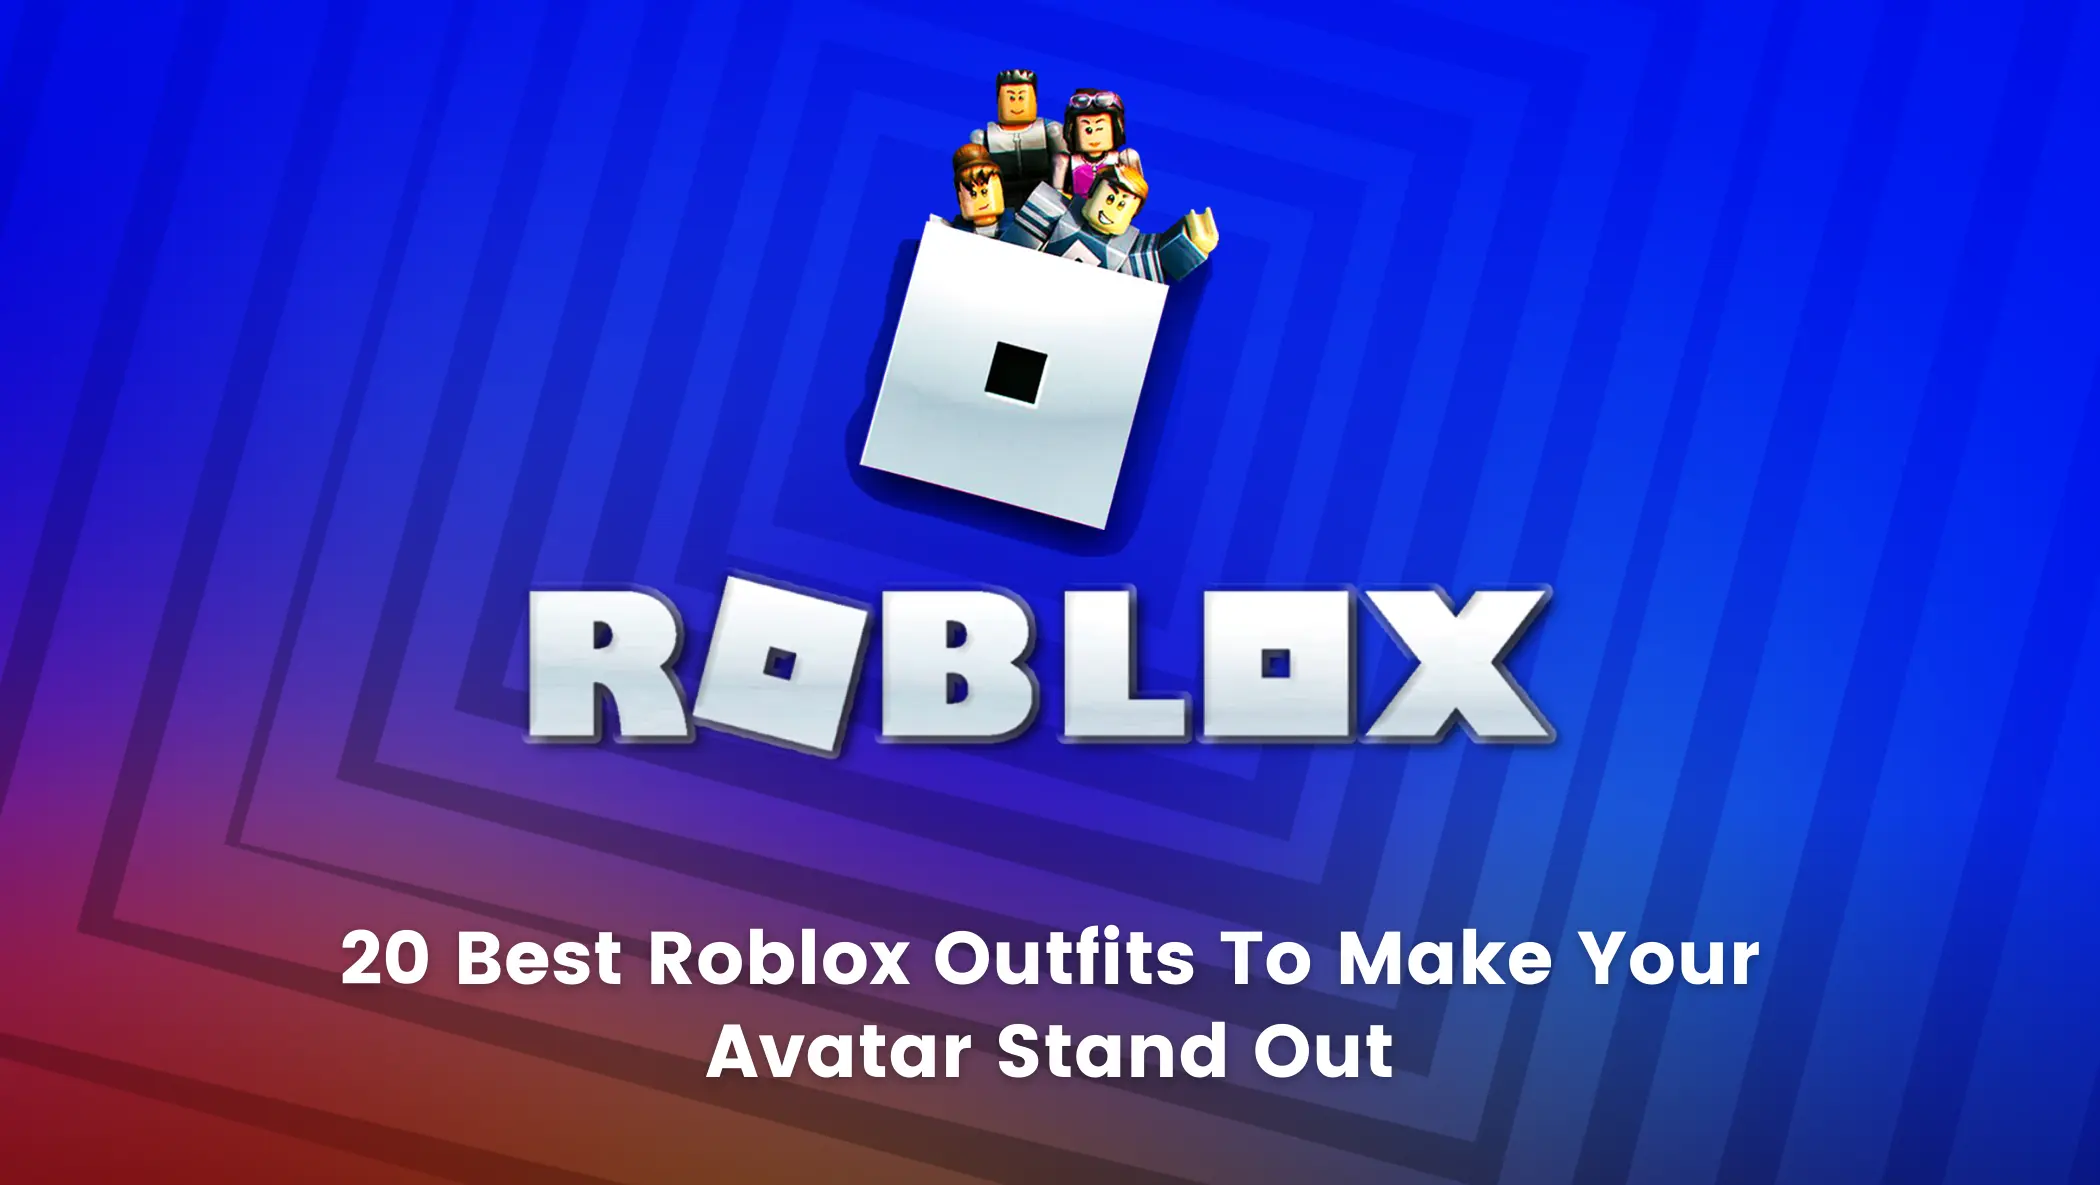 5 best dressed designers on Roblox